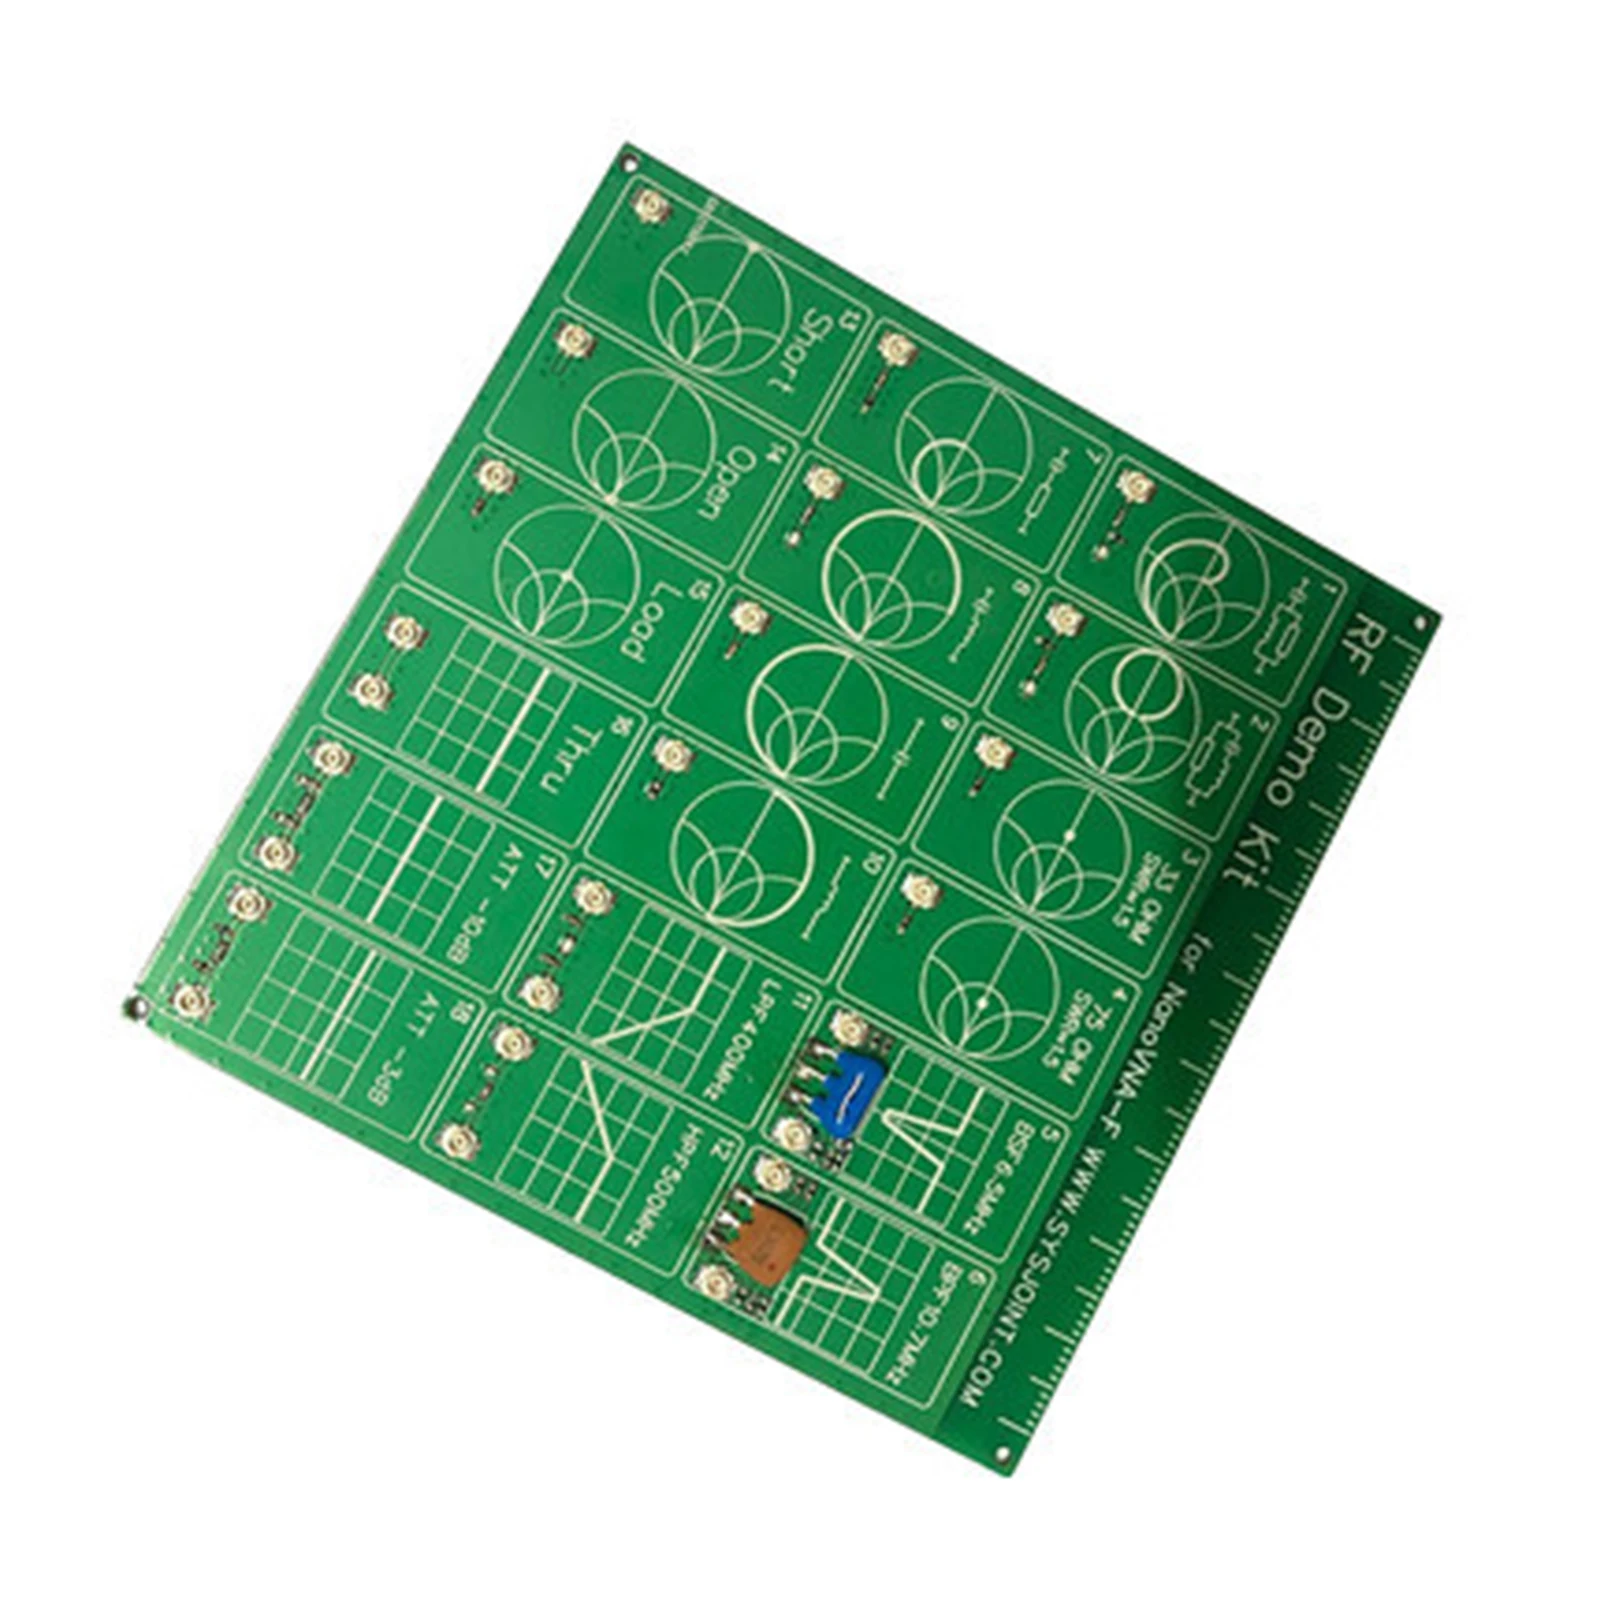 RF Test Board Modules, RF Demo Kit, NanoVNA RF Test Module, Vector Network Analyzer Board Filter Attenuator